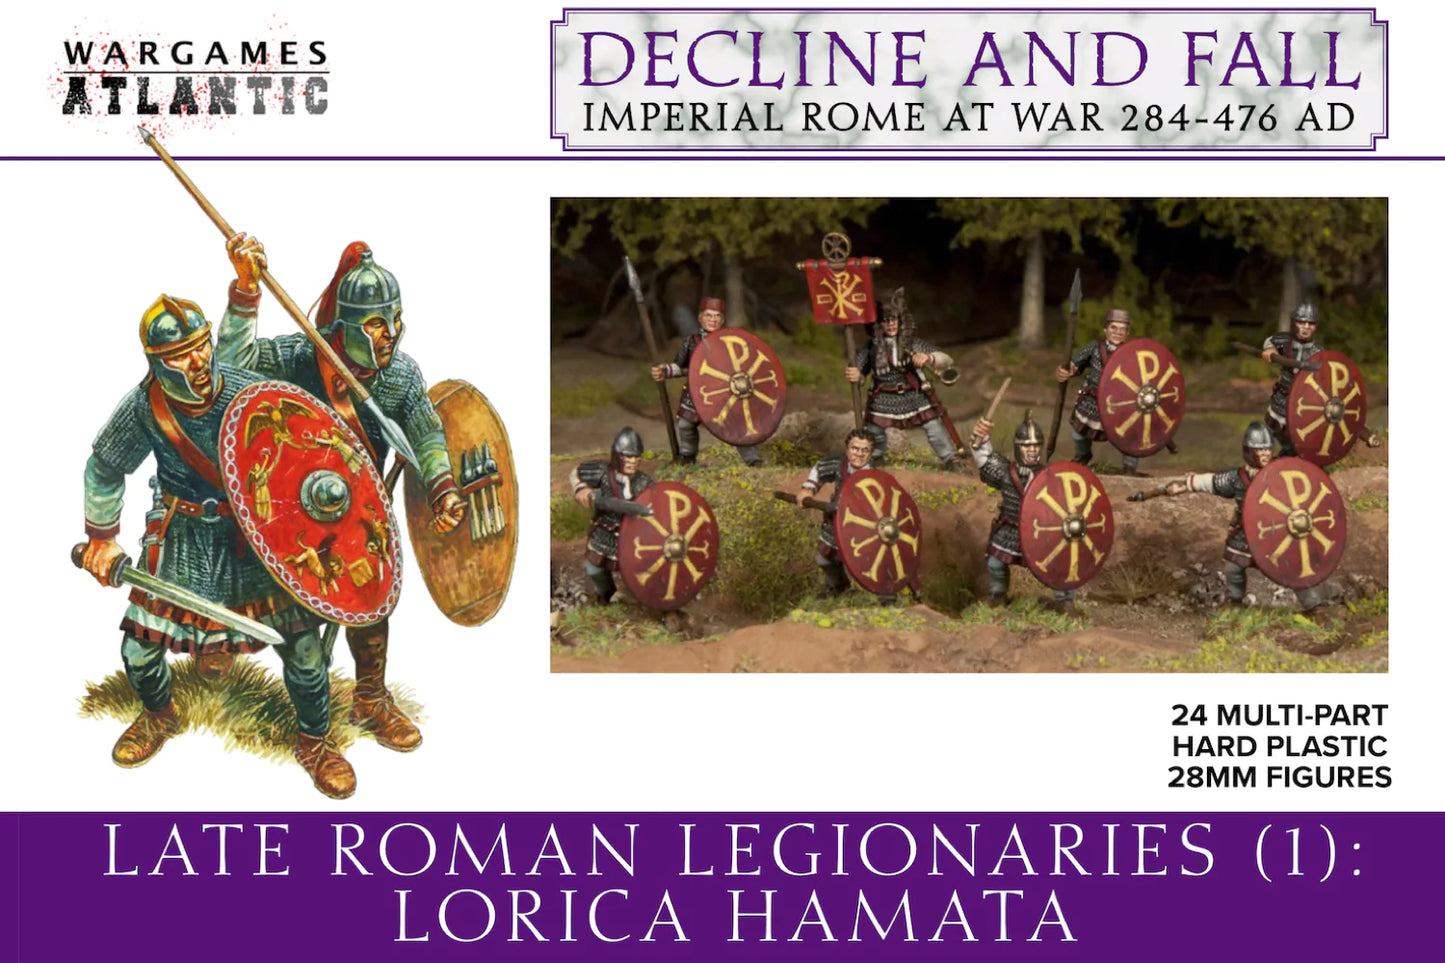 Decline and Fall: Late Roman Legionaries - Lorica Hamata